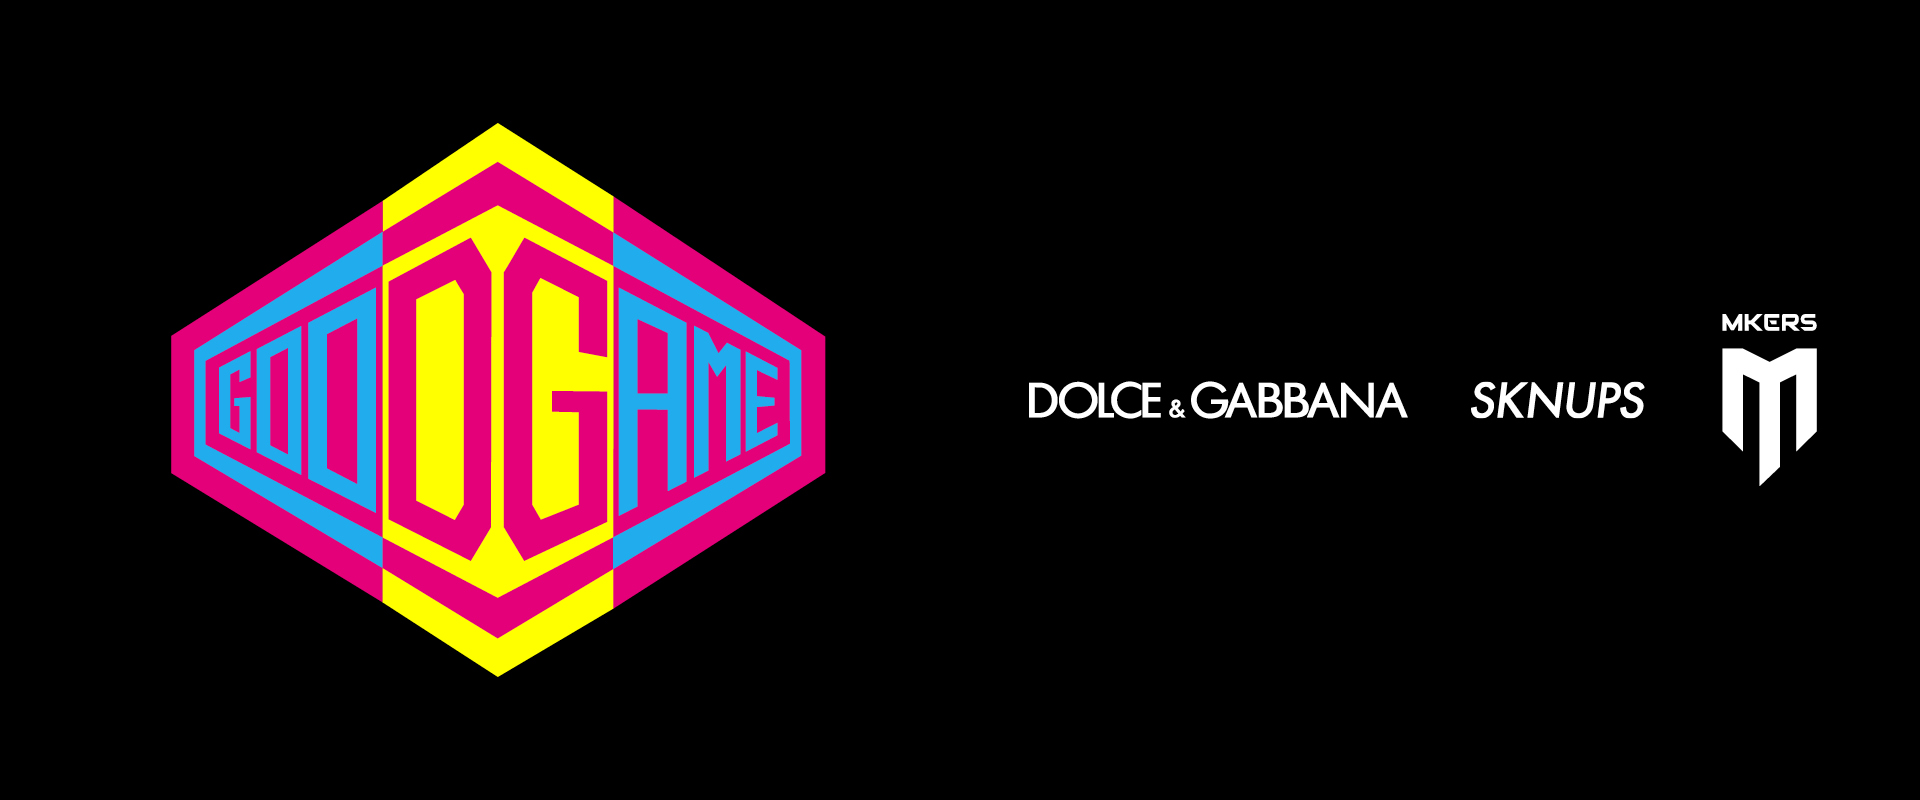 dolce-and-gabbana-goodgame-top-banner-desktop